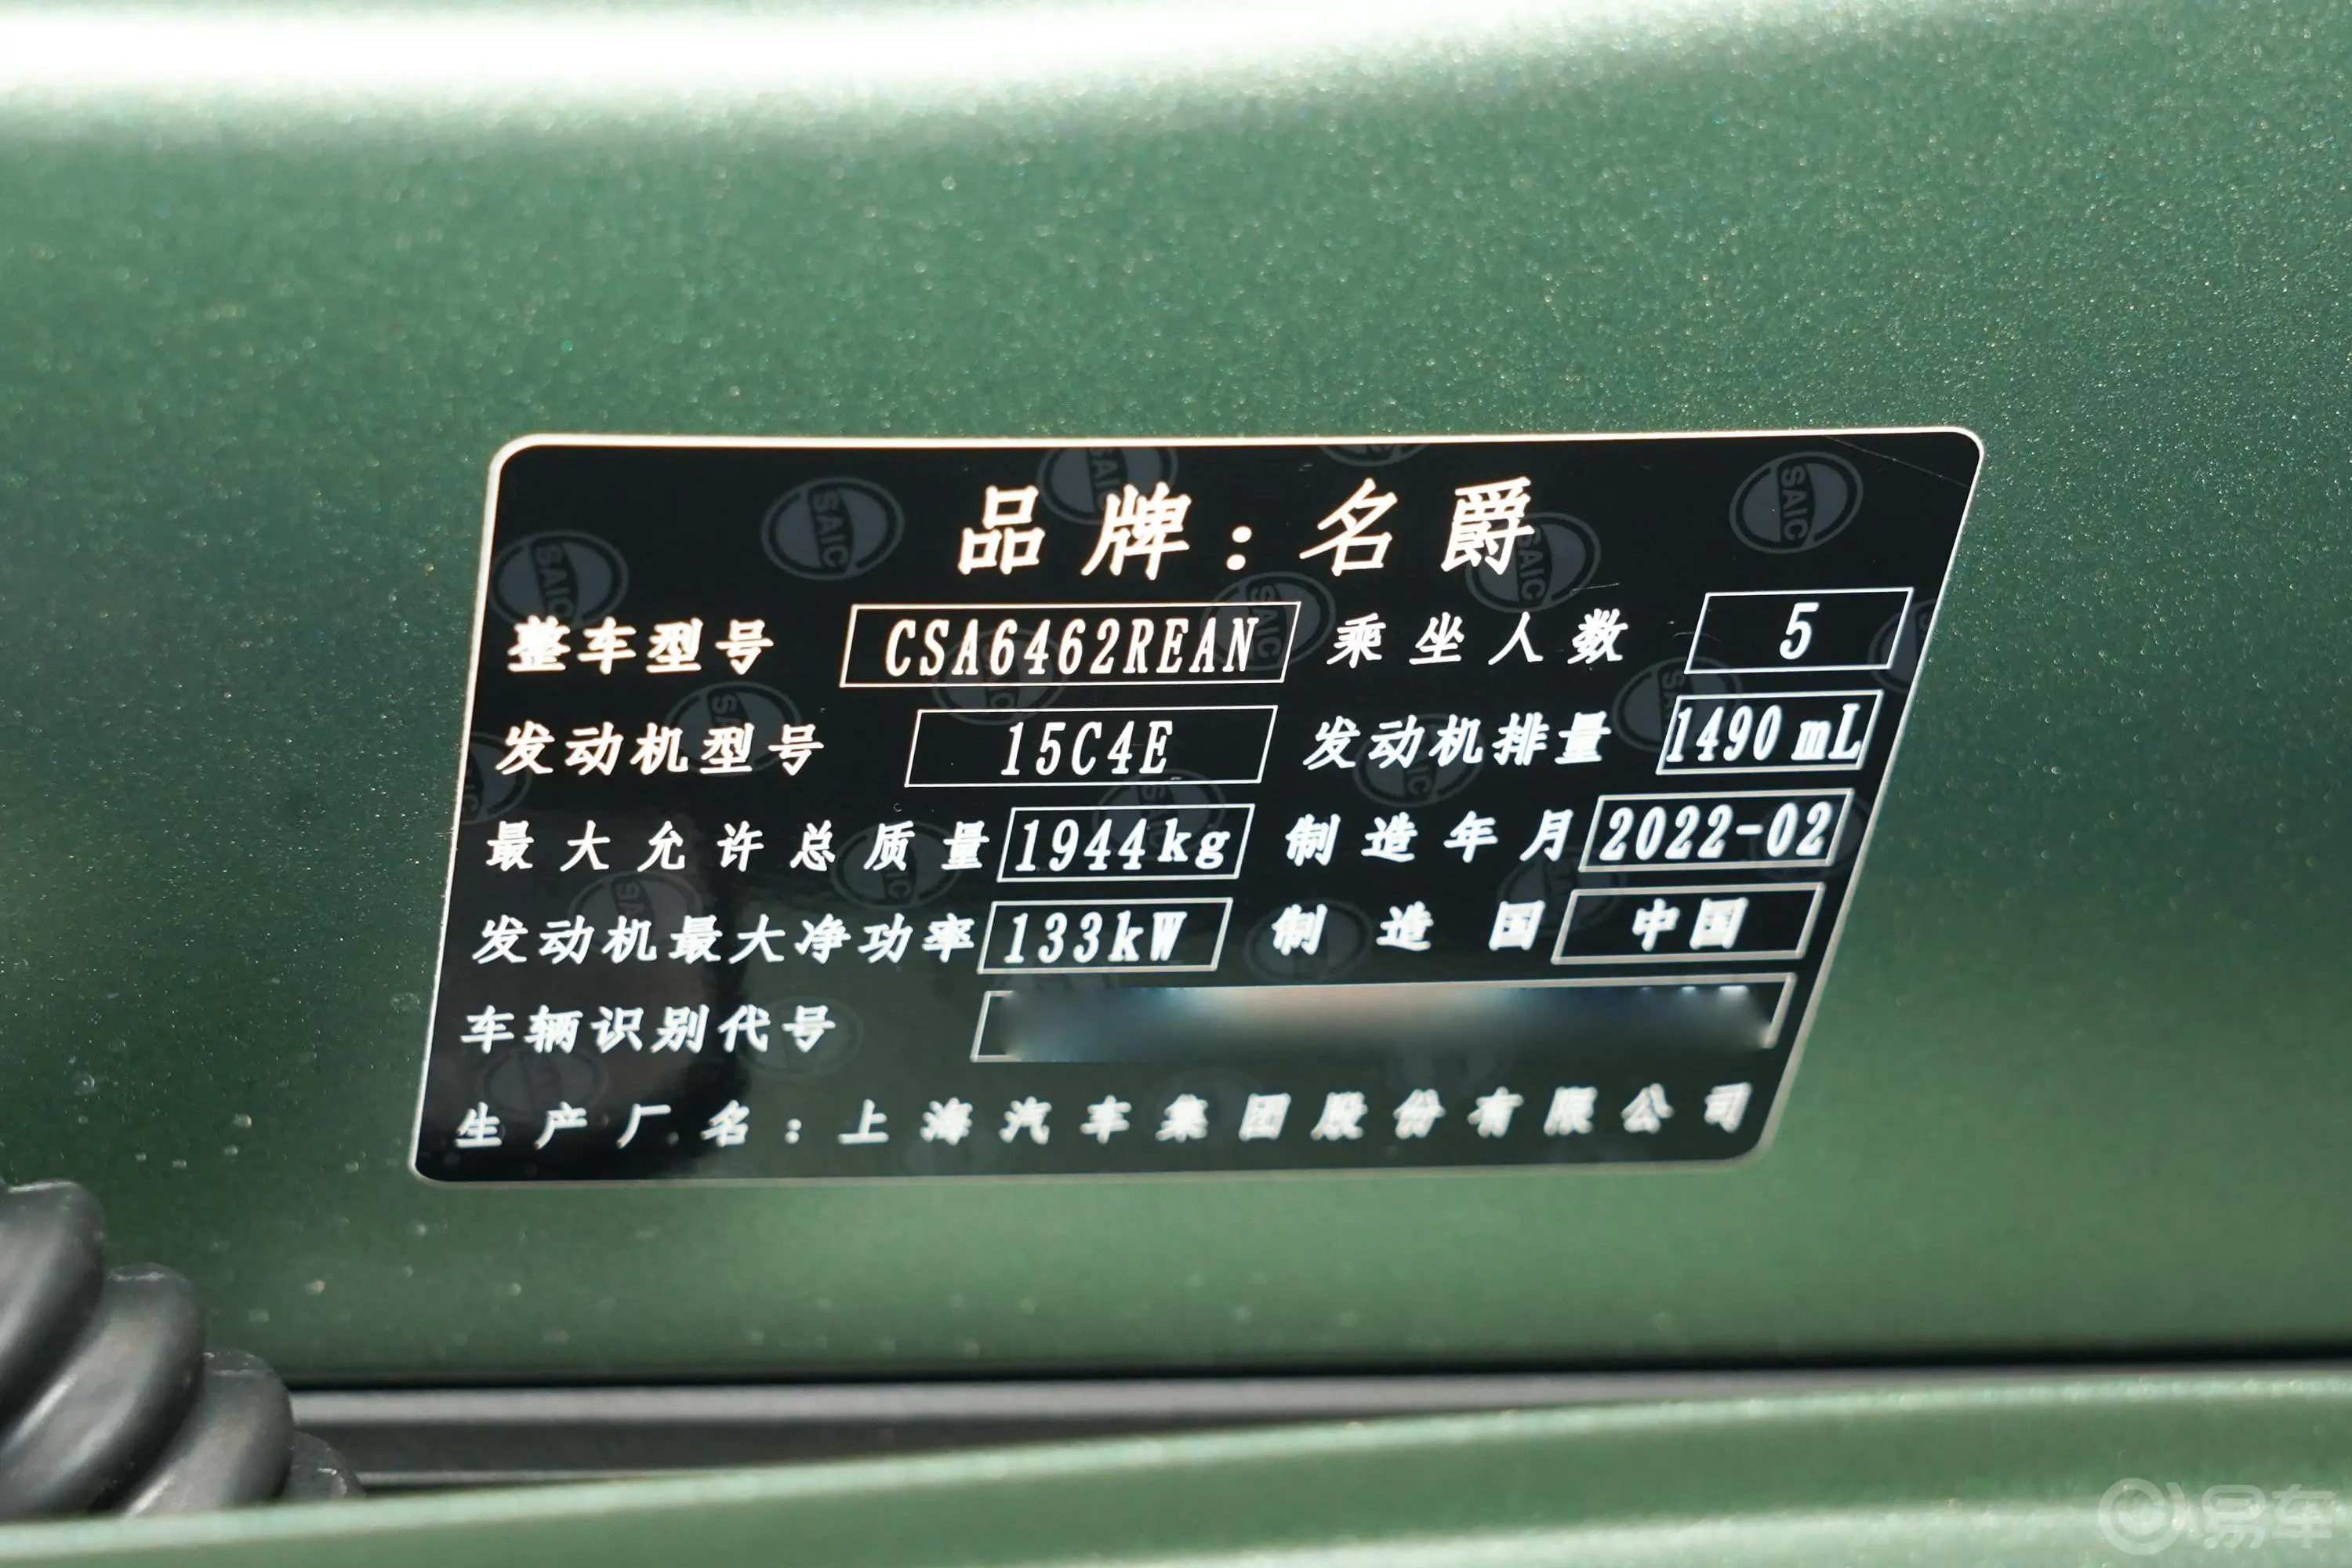 MG ONE质享生活 1.5T CVT β 大满足1228版车辆信息铭牌